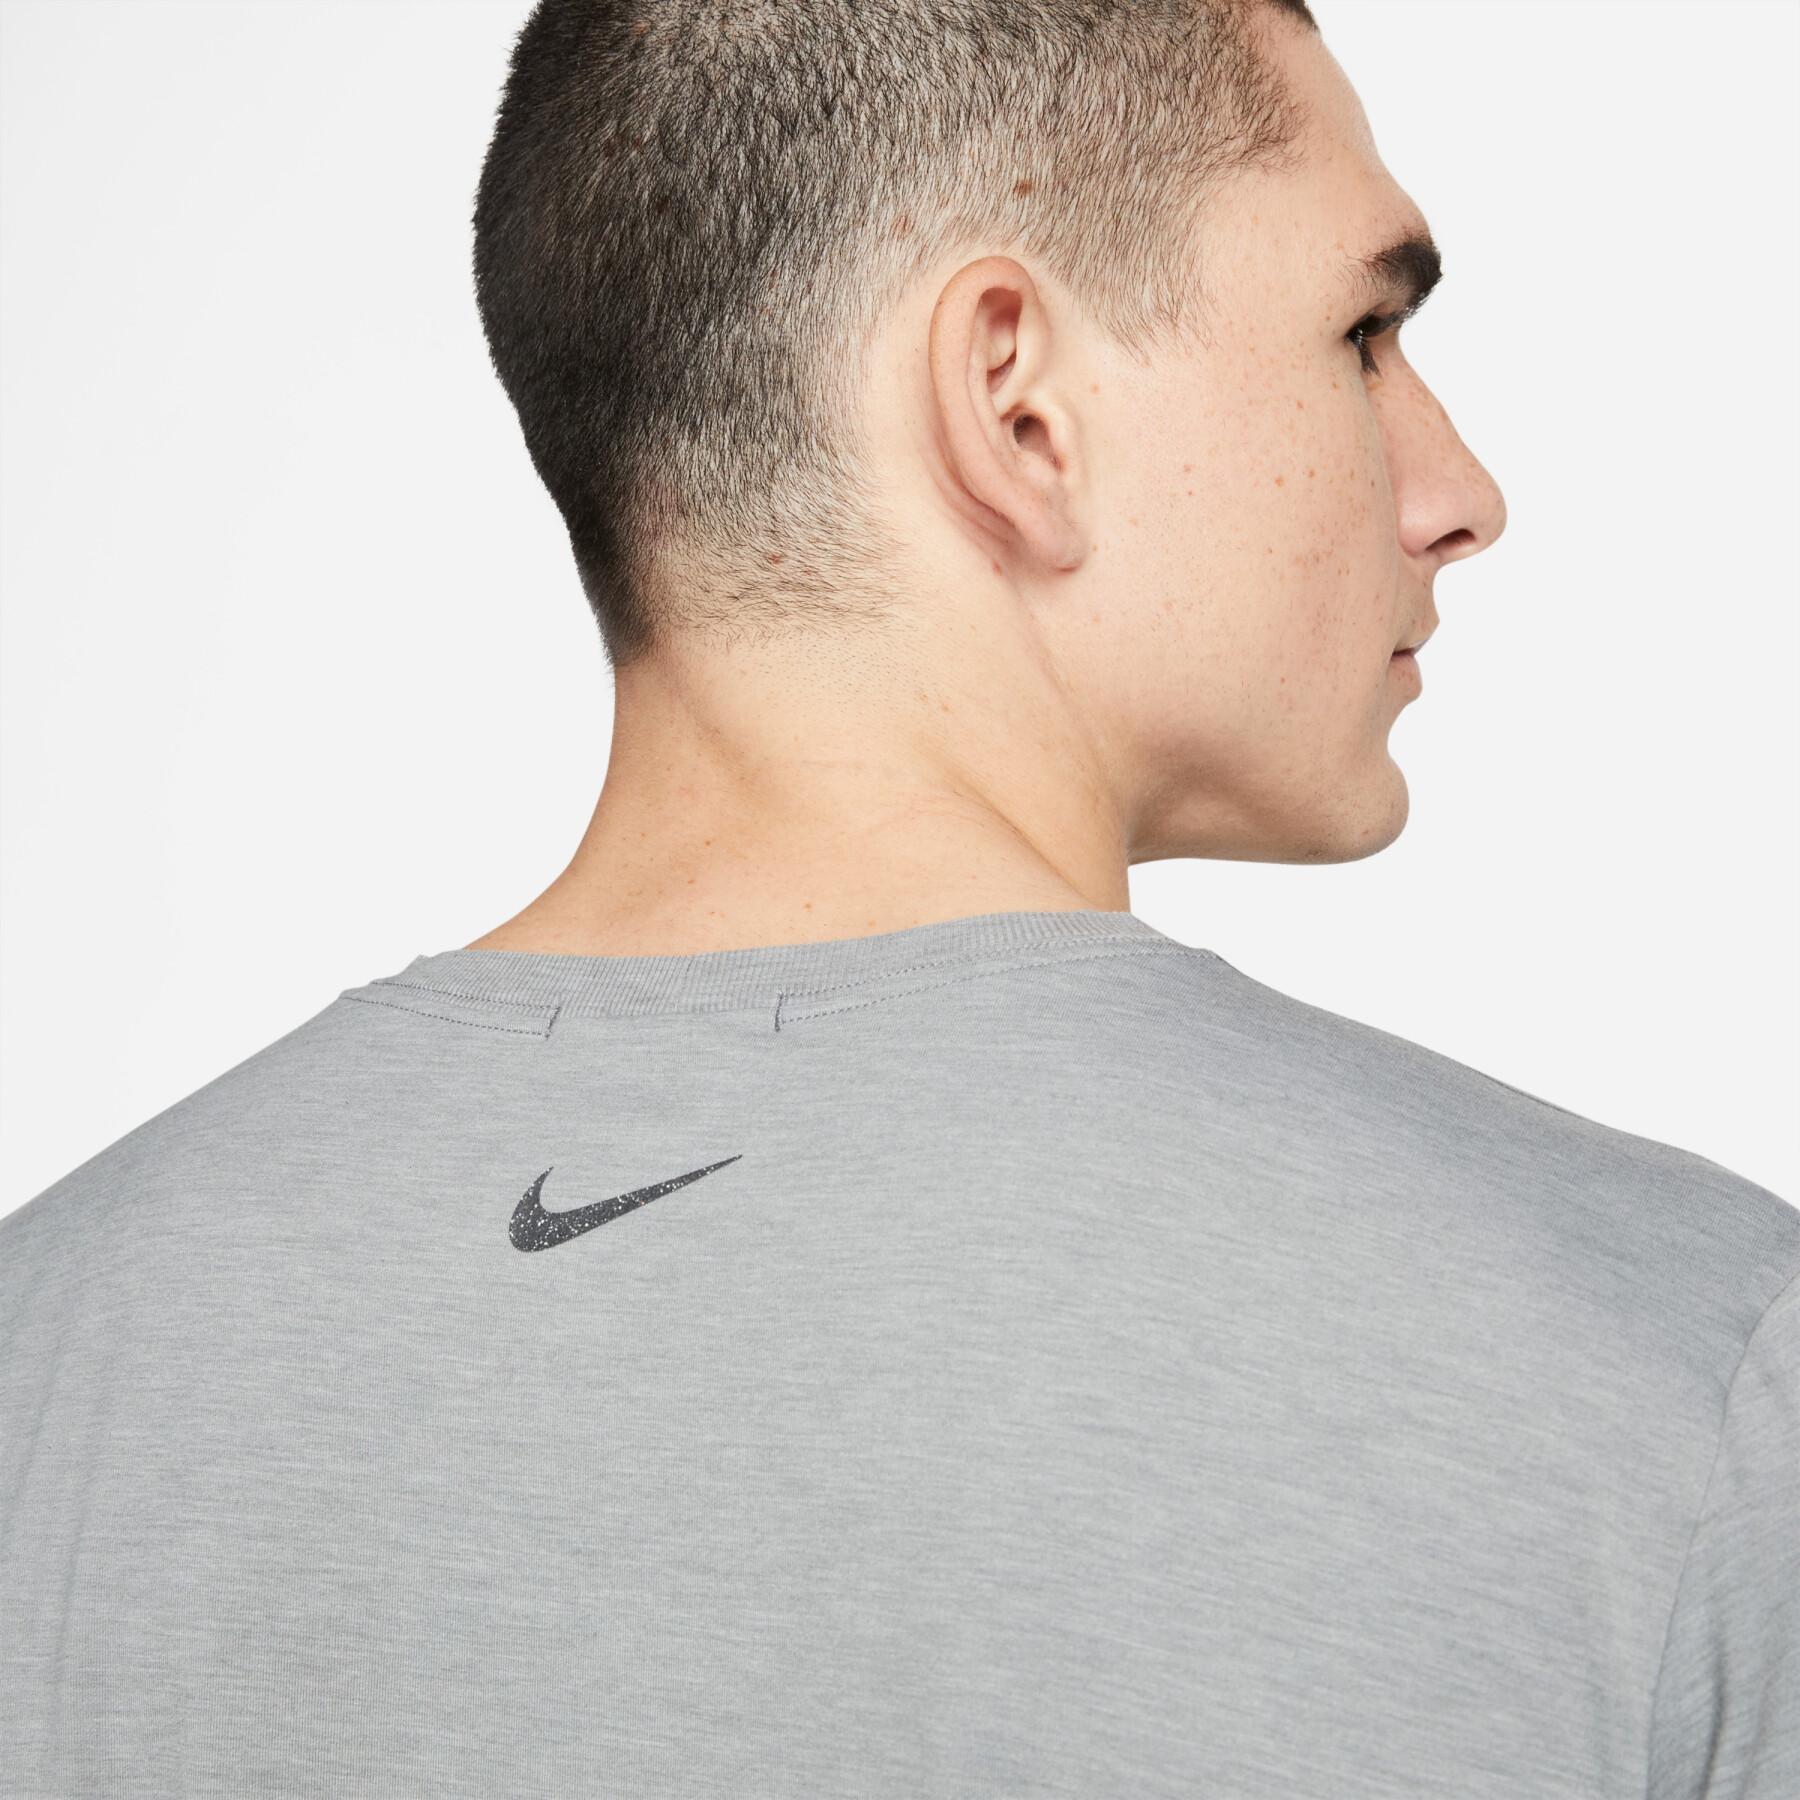 Jersey Nike Yoga Dri-FIT - T-shirts - Men's Clothing - Fitness